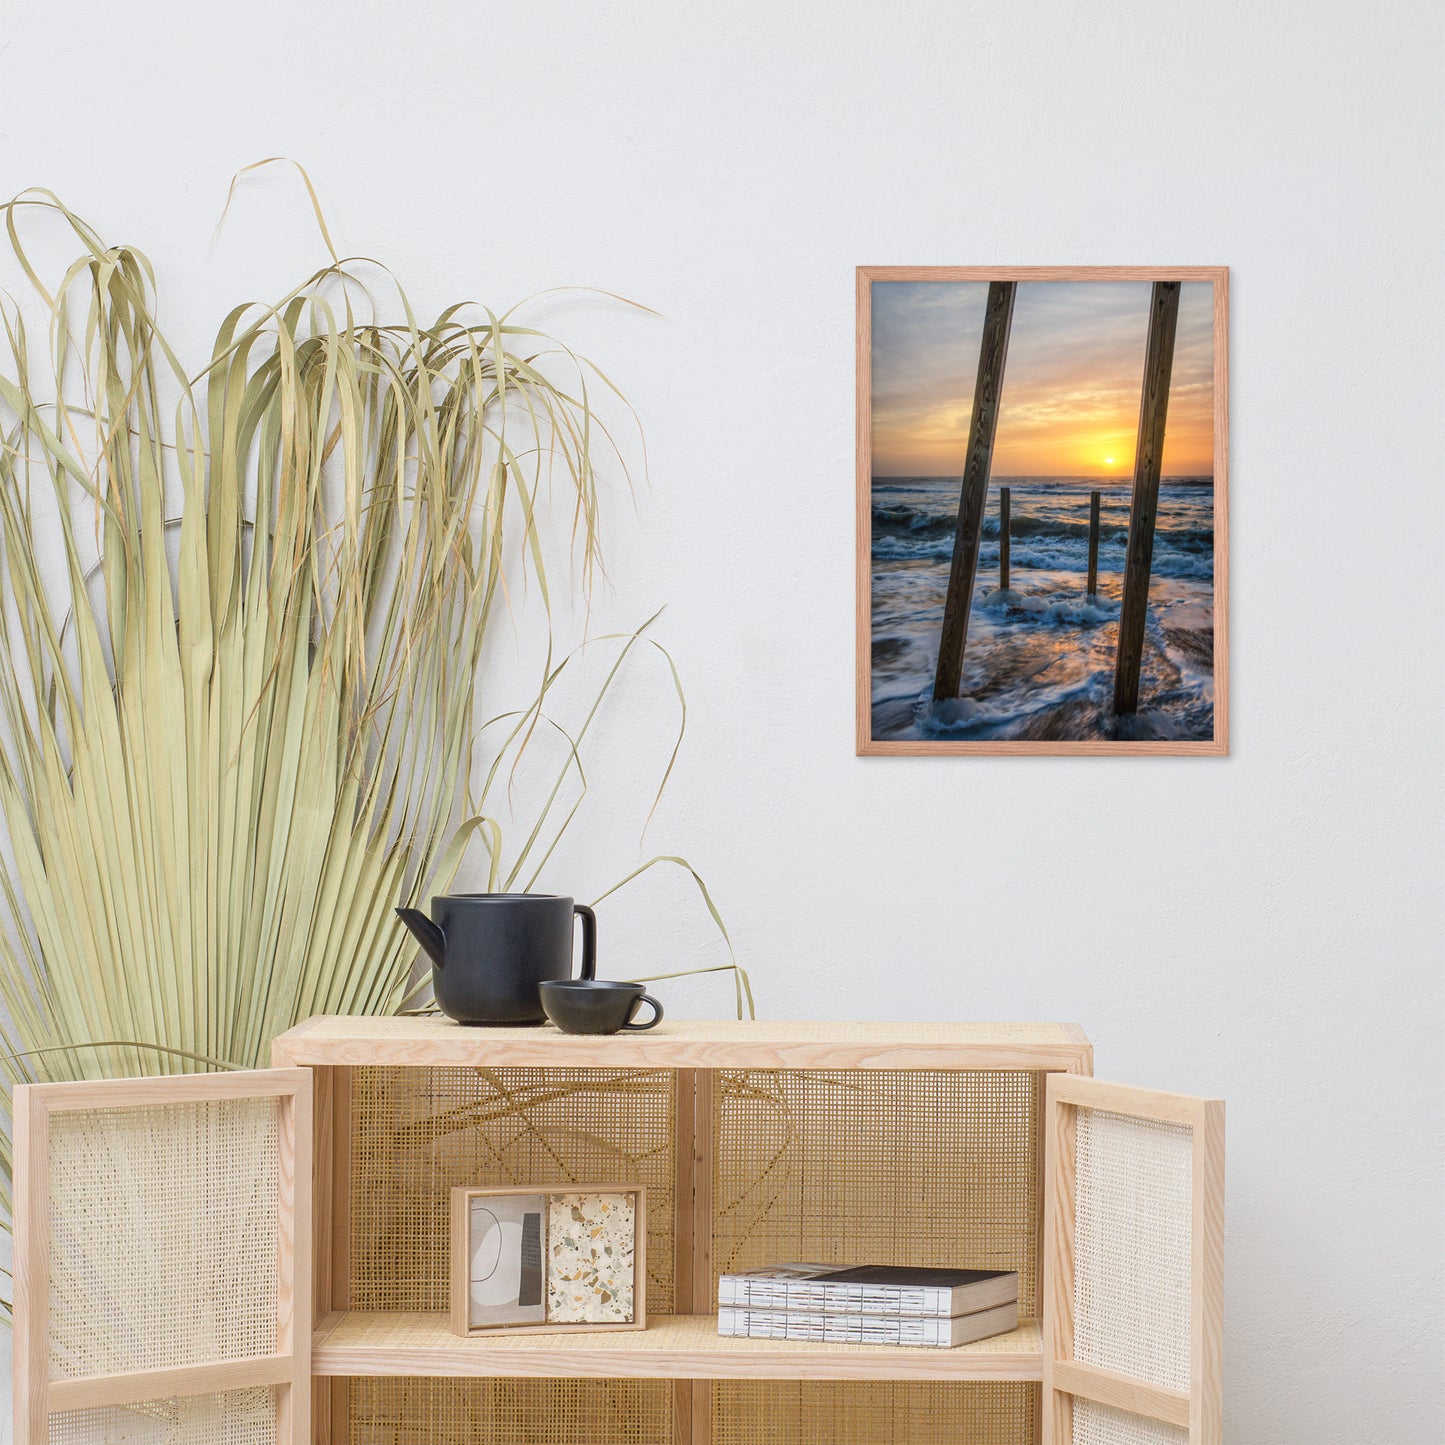 Sunrise Between the Pillars Coastal Landscape Framed Photo Paper Wall Art Prints